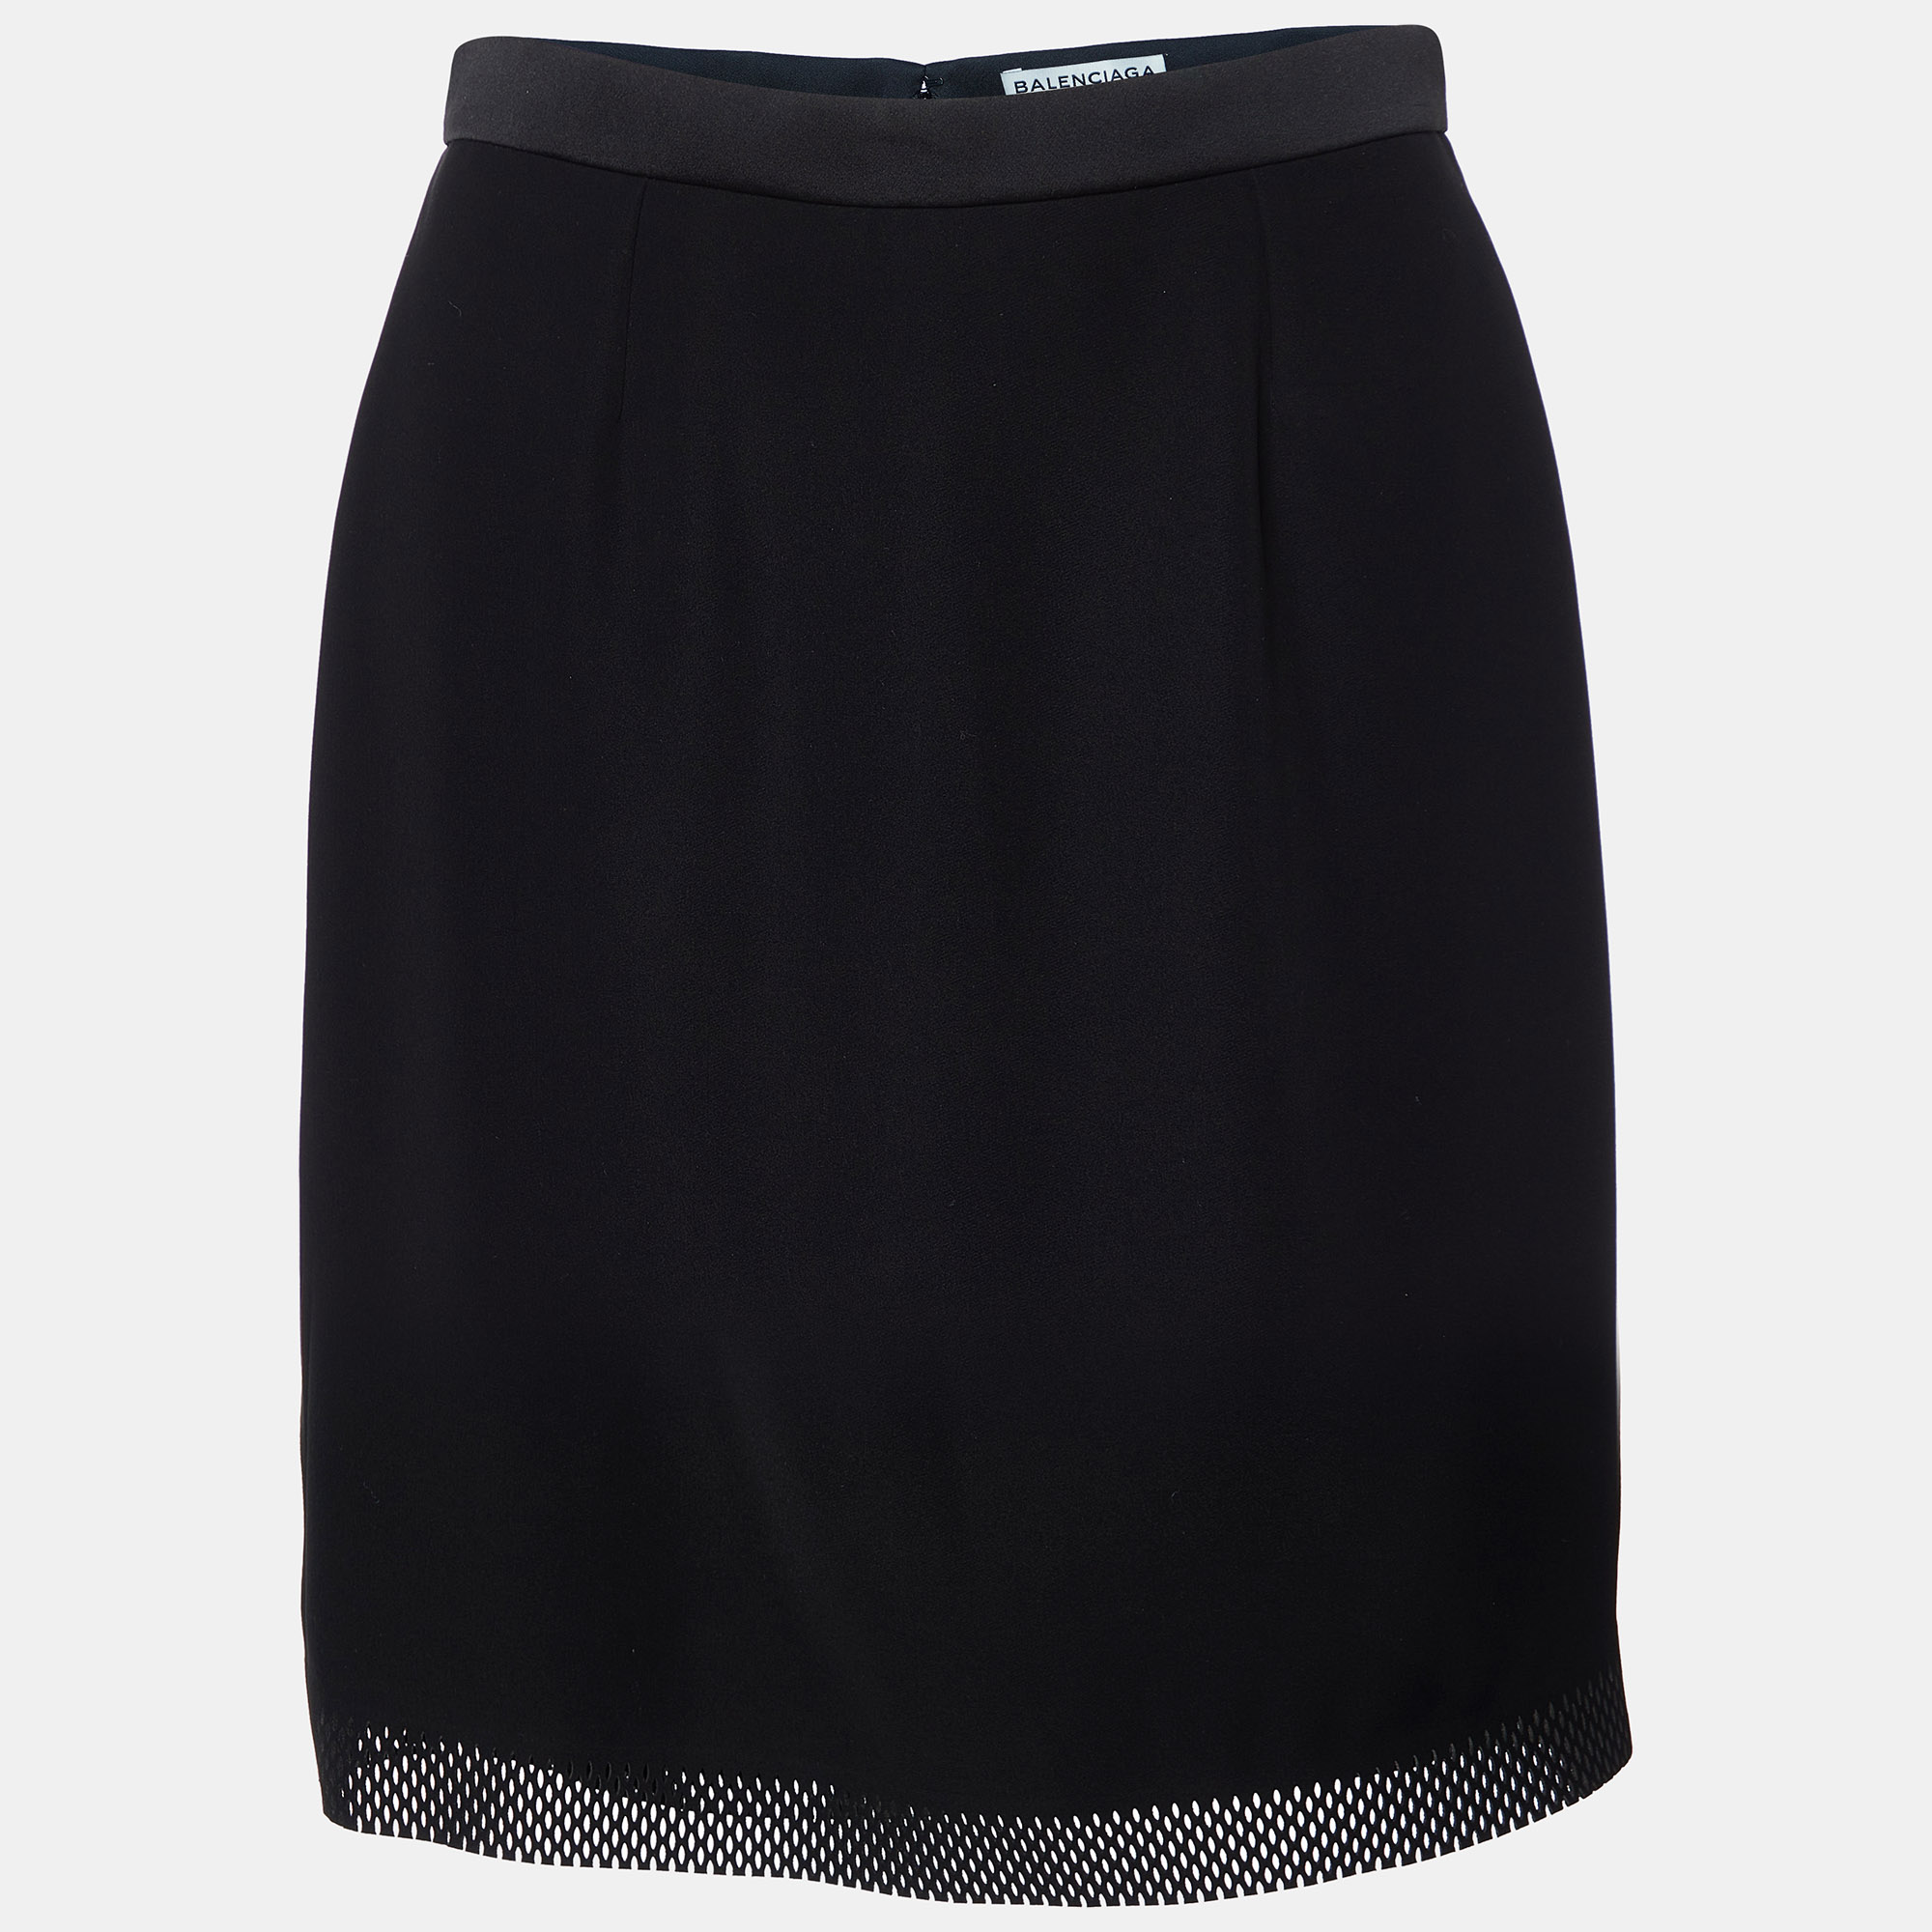 Balenciaga black jersey laser cut detail mini skirt s